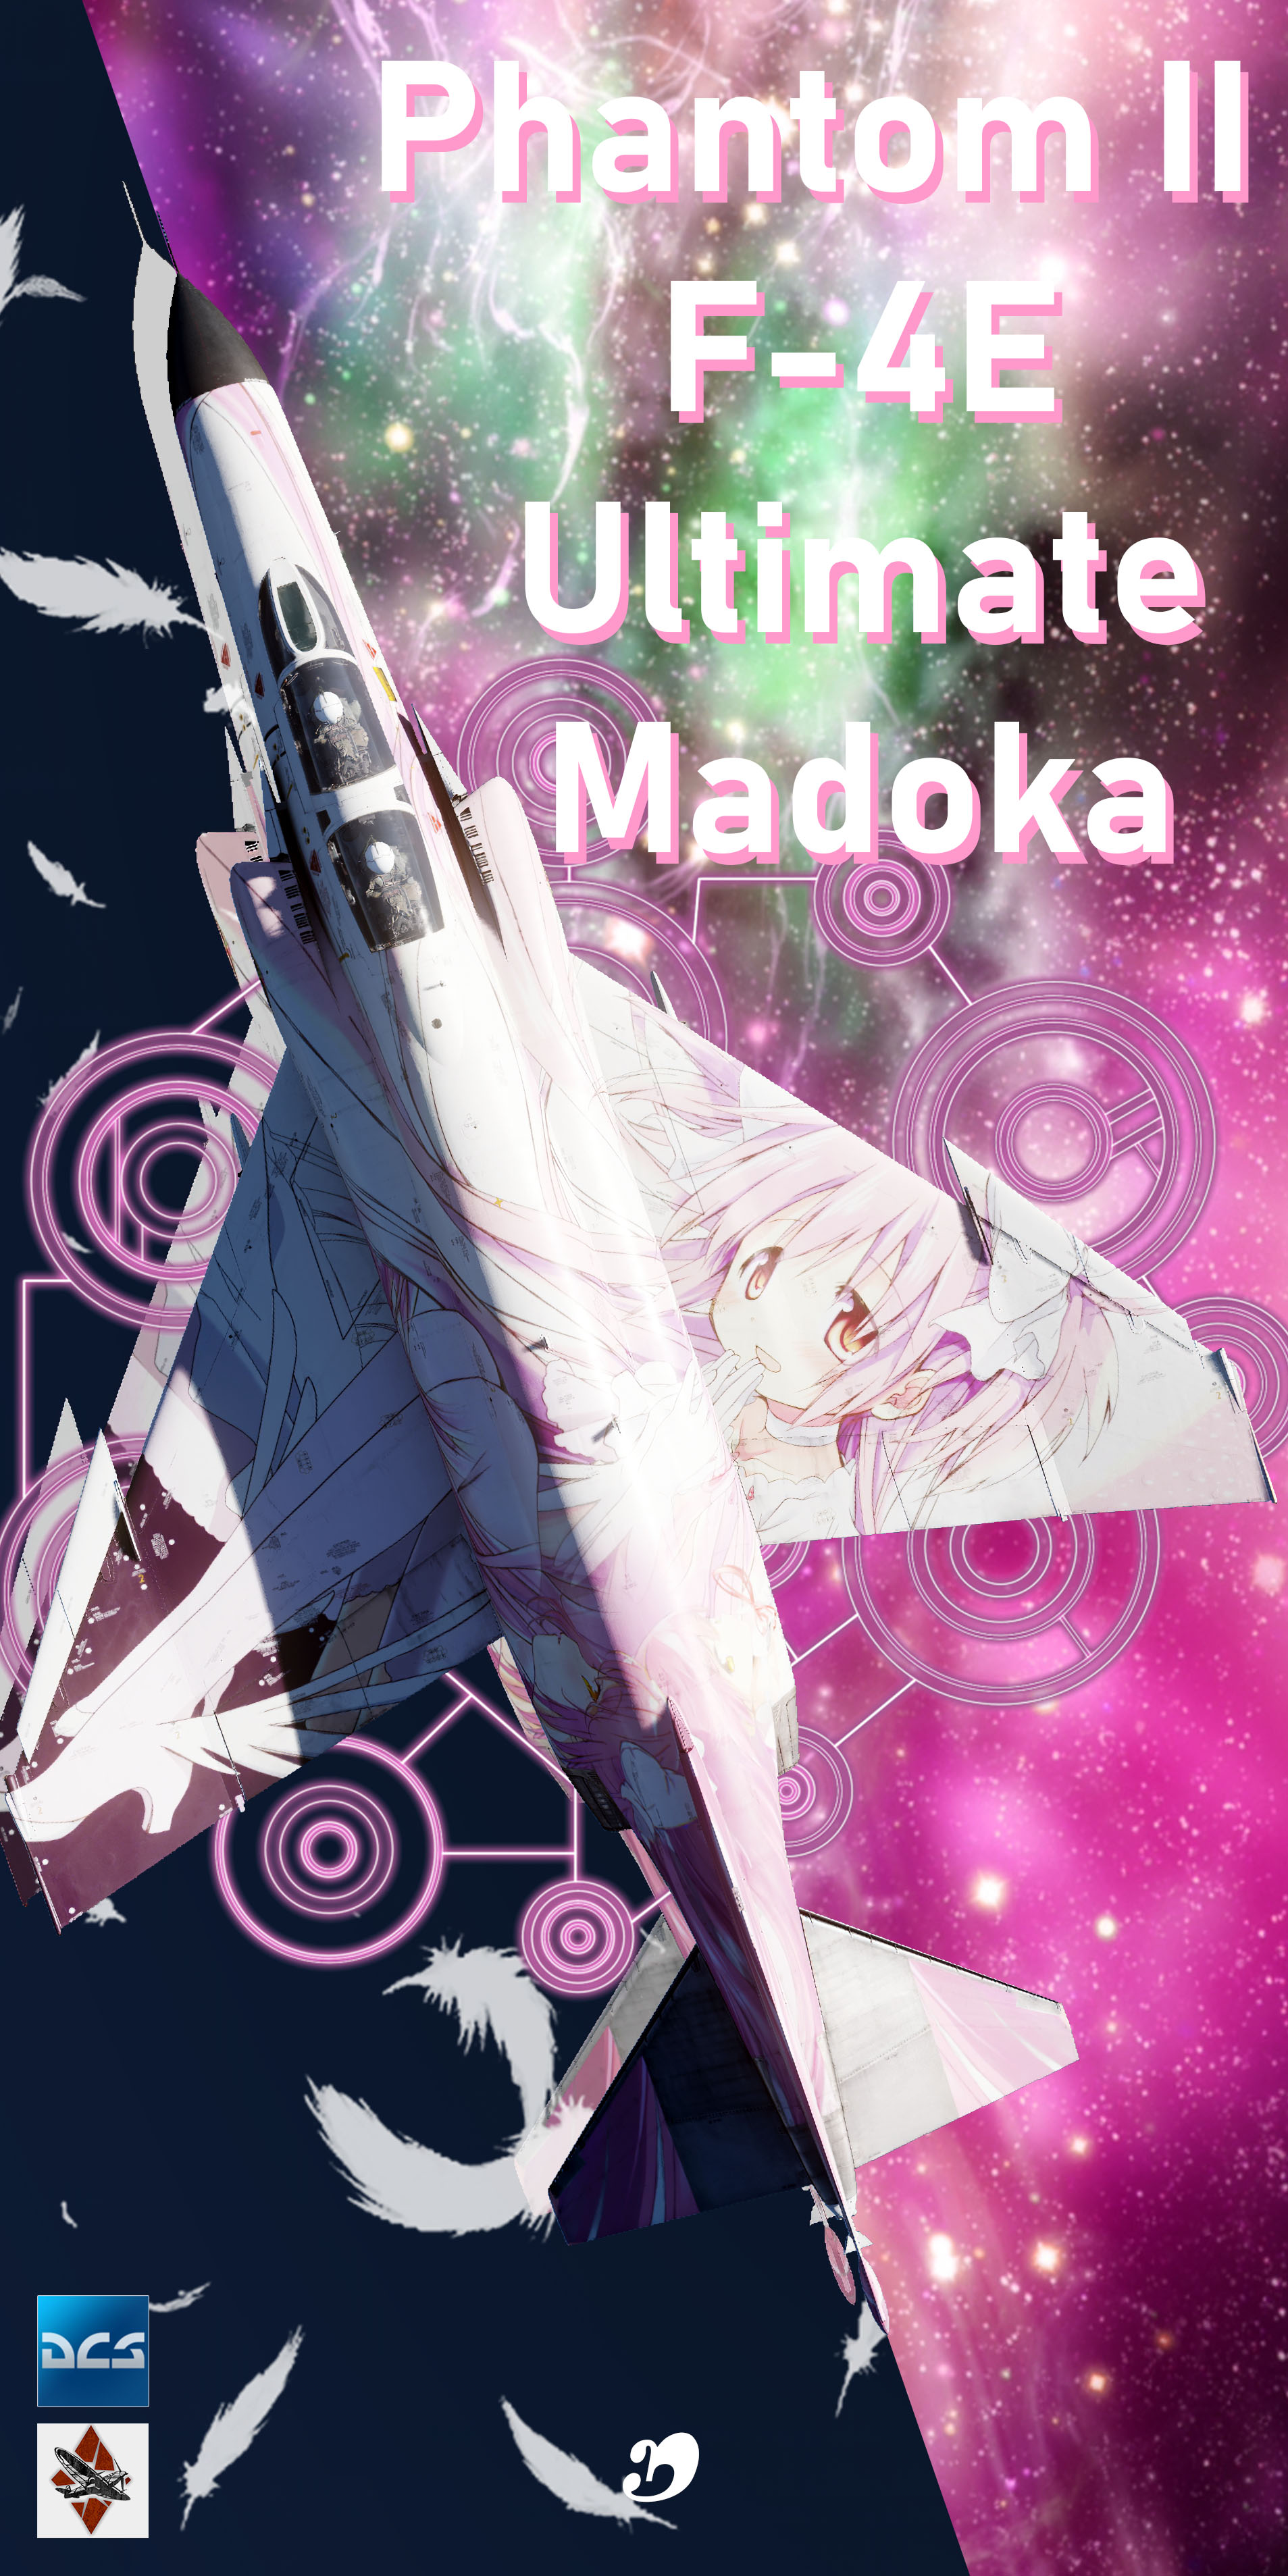 Anime Skin: Ultimate Madoka for HeatBlur F4-E Phantom II